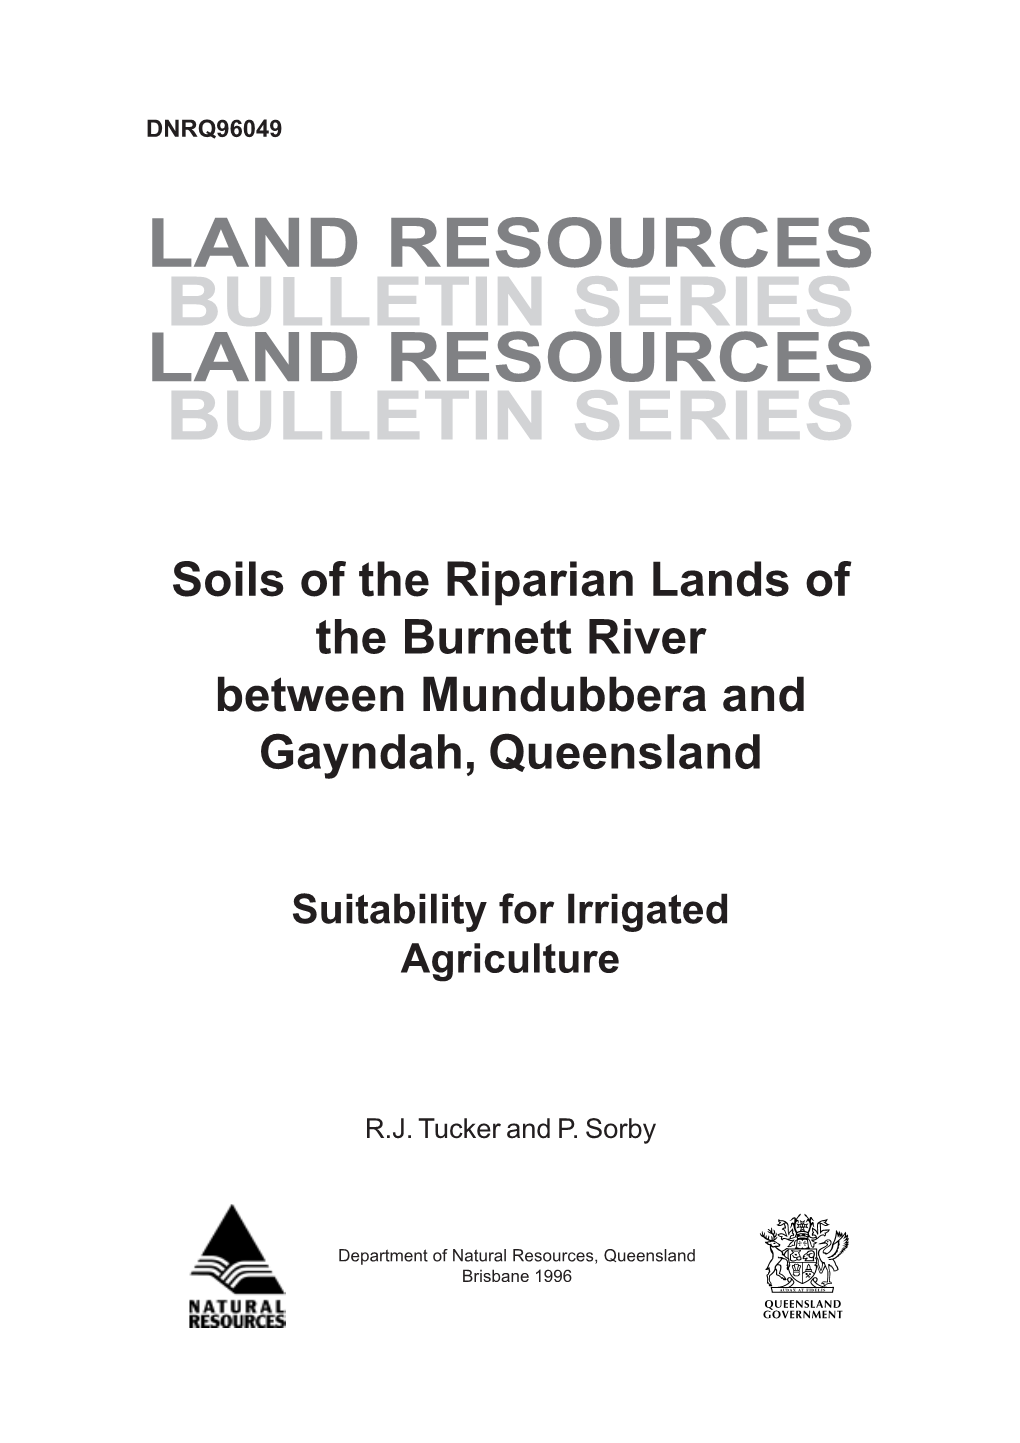 Soils of the Riparian Lands of the Burnett River Between Mundubbera and Gayndah, Queensland